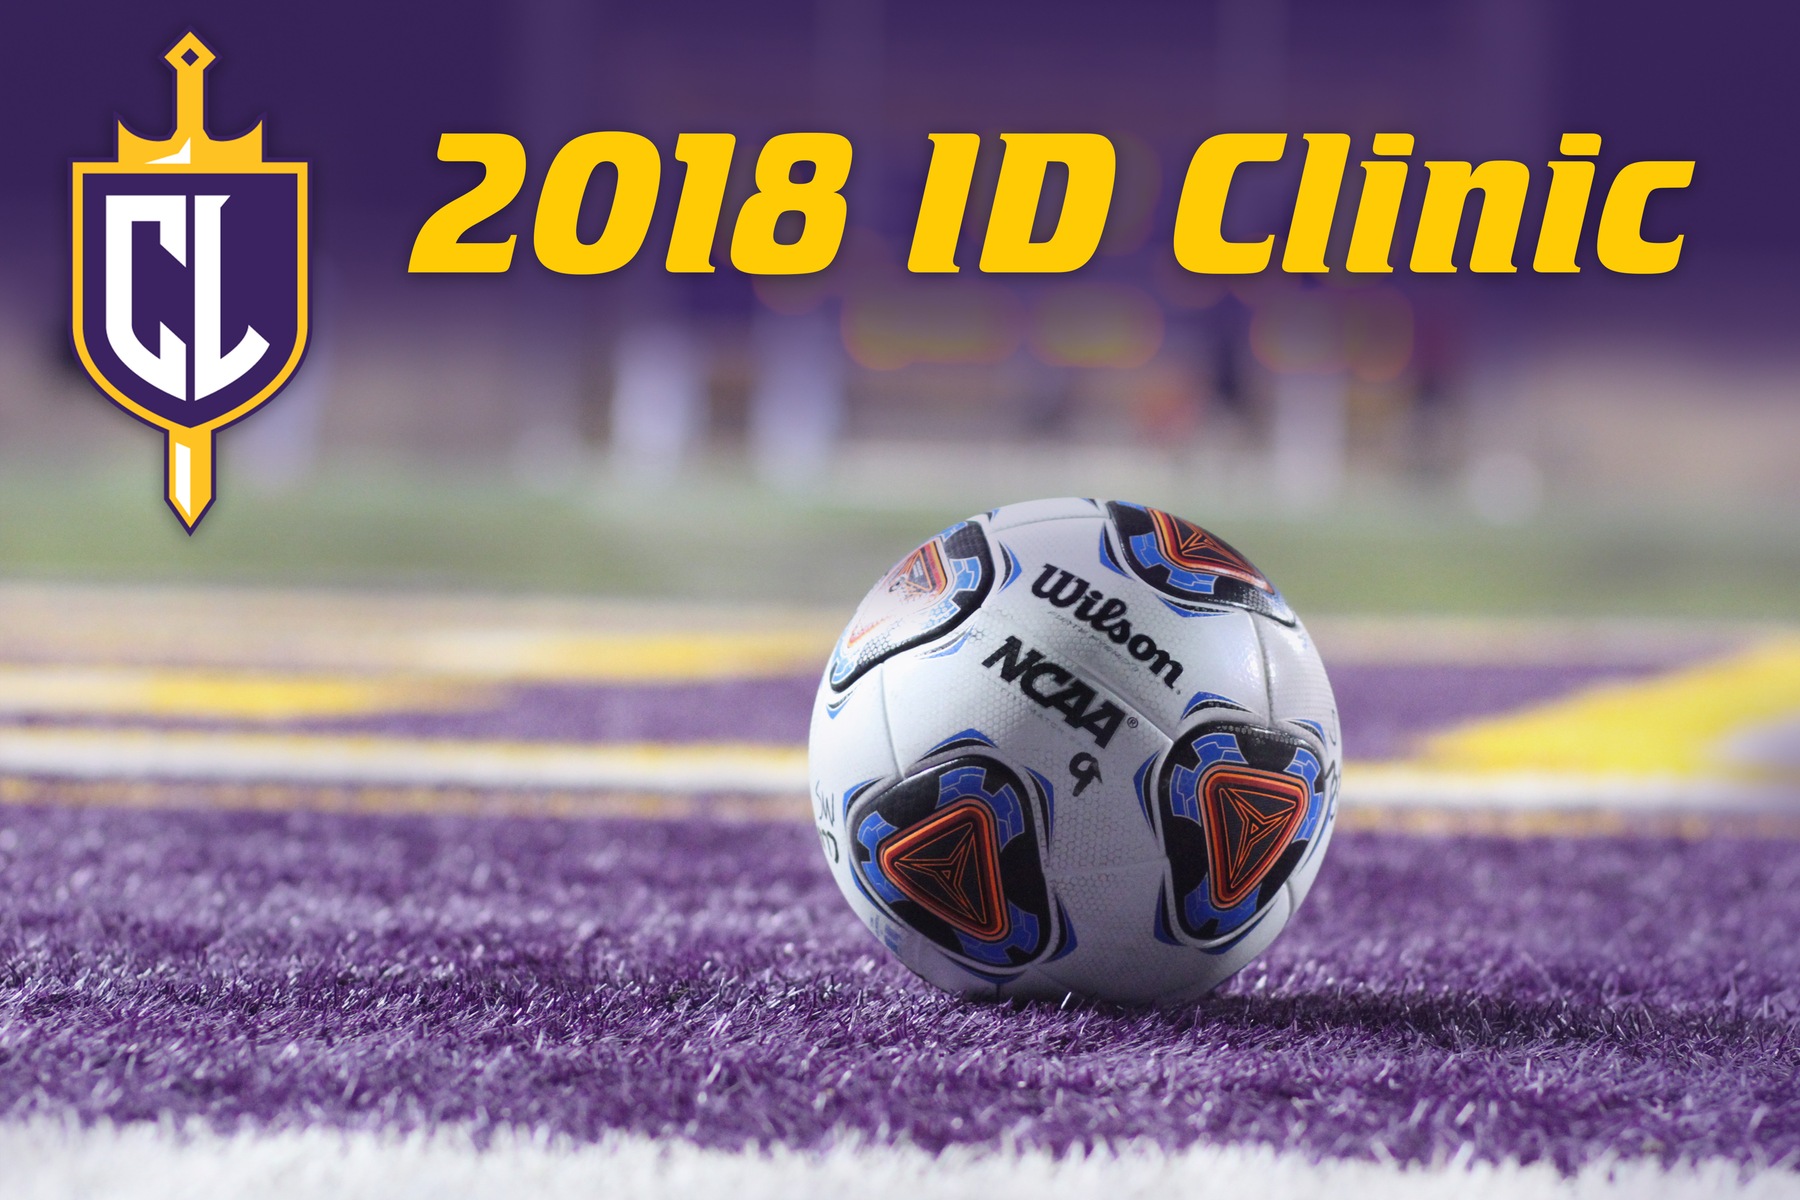 Cal Lutheran Soccer ID Clinic